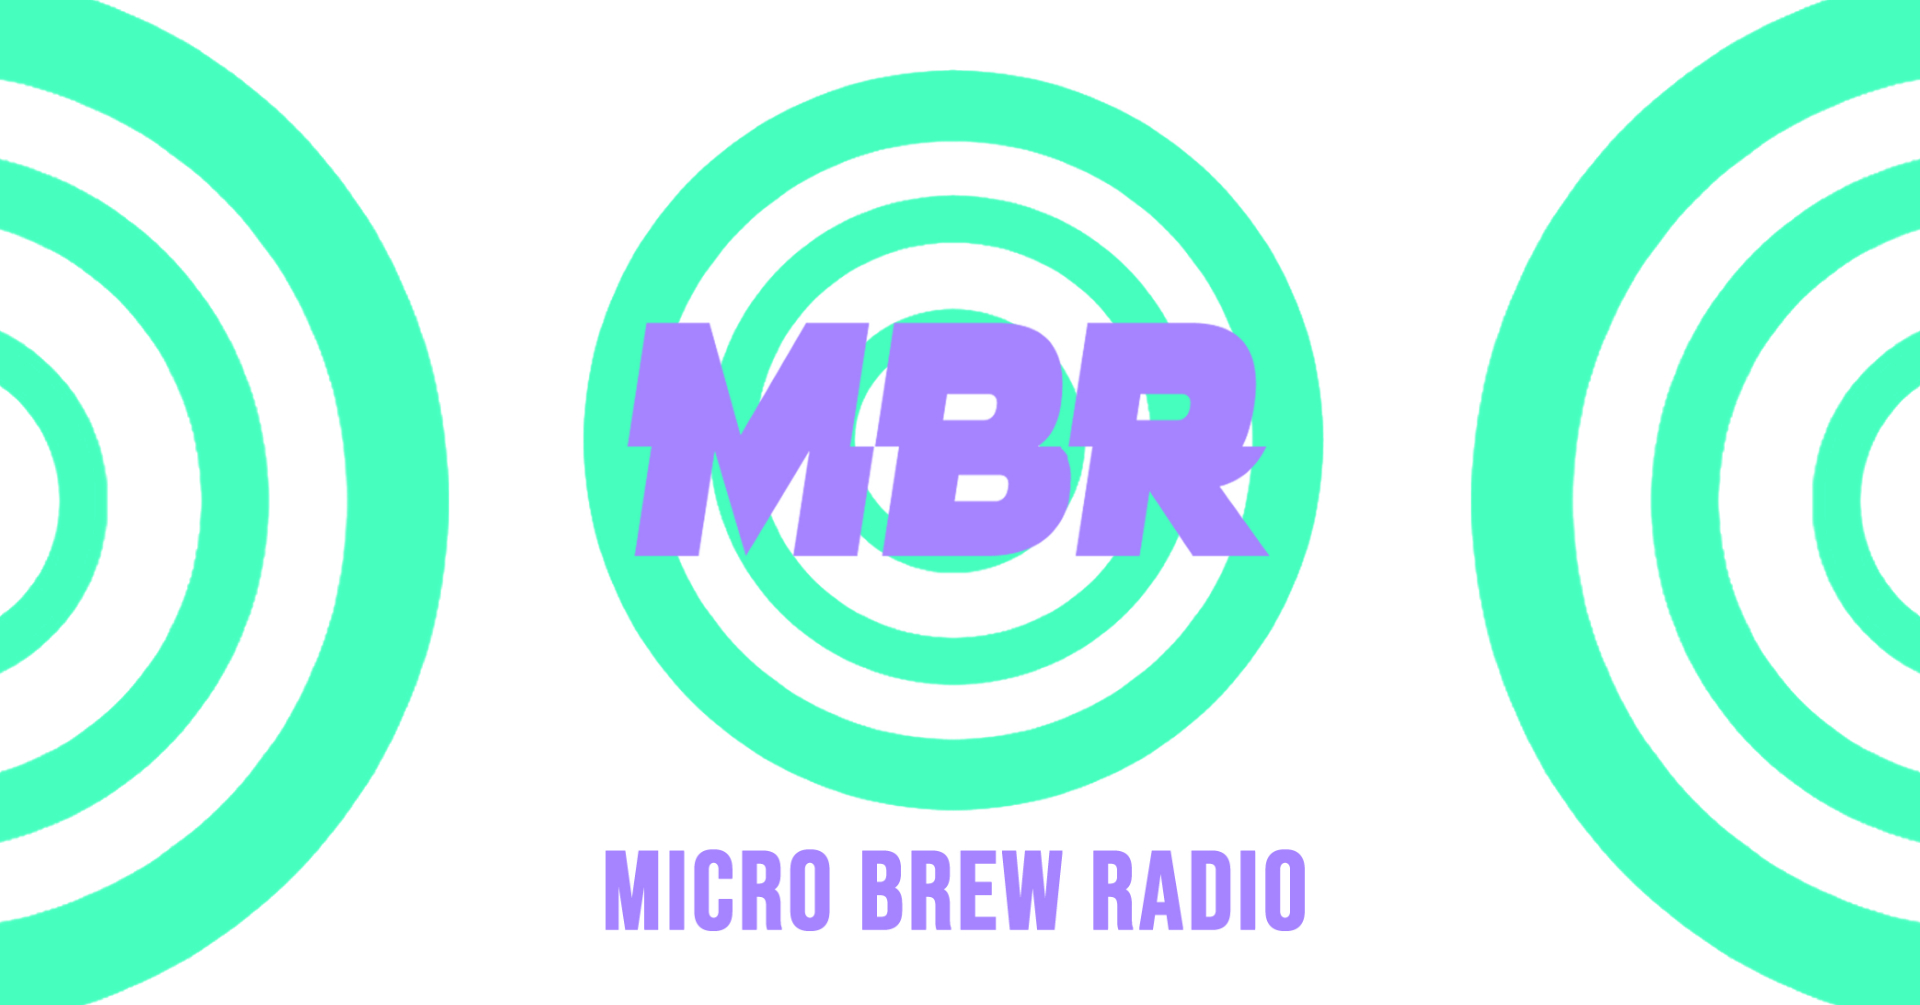 Microbrew radio logo